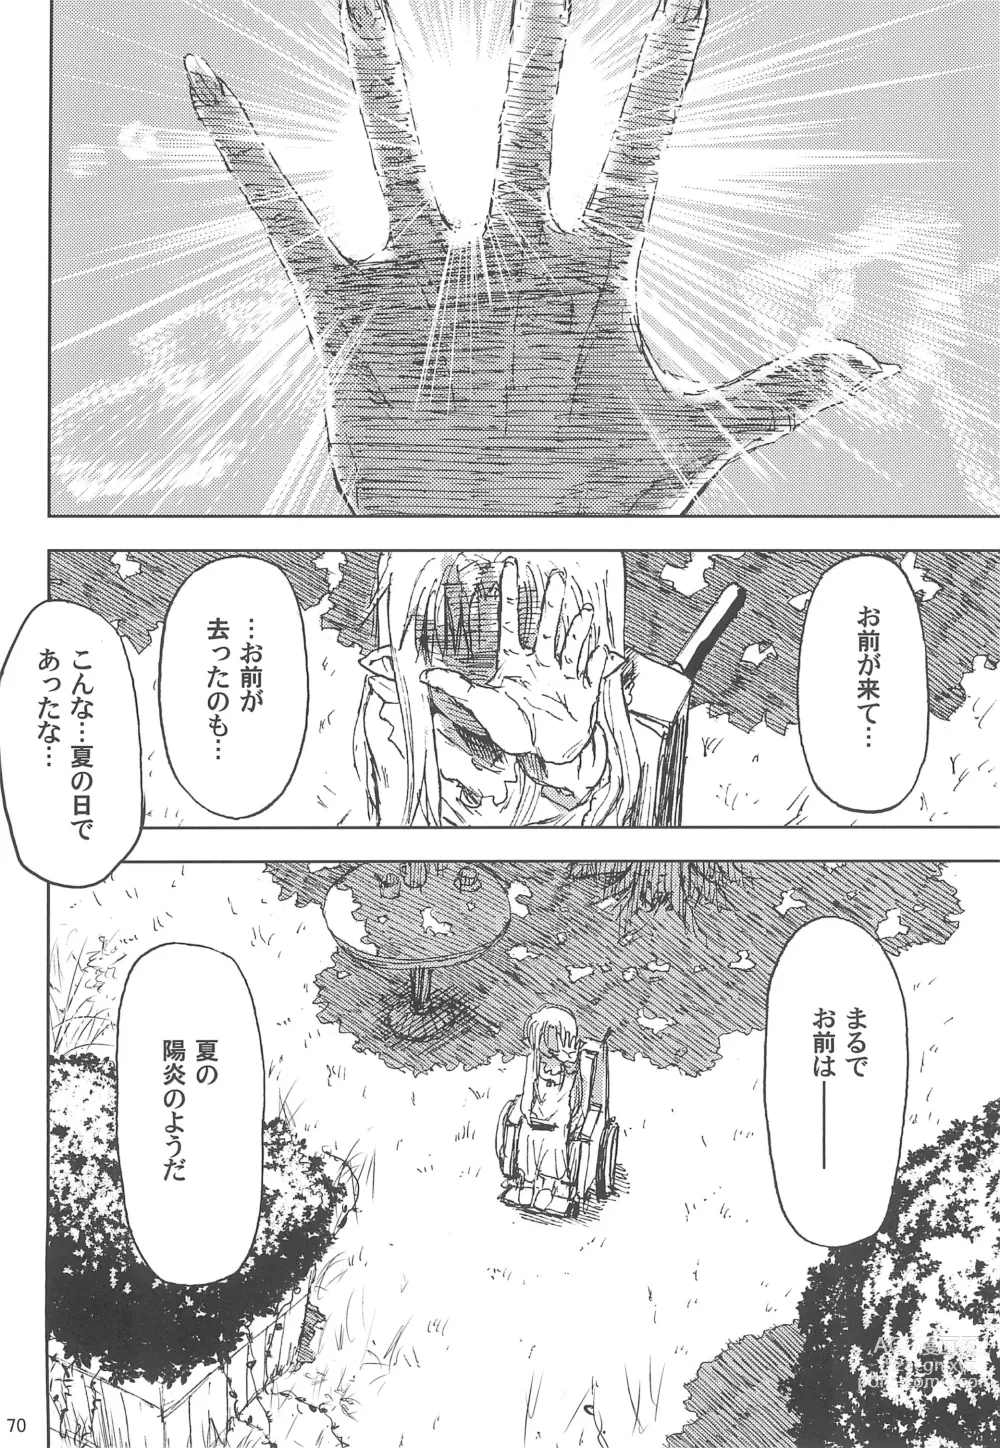 Page 70 of doujinshi Maigo no Maigo no Hime-sama Plus